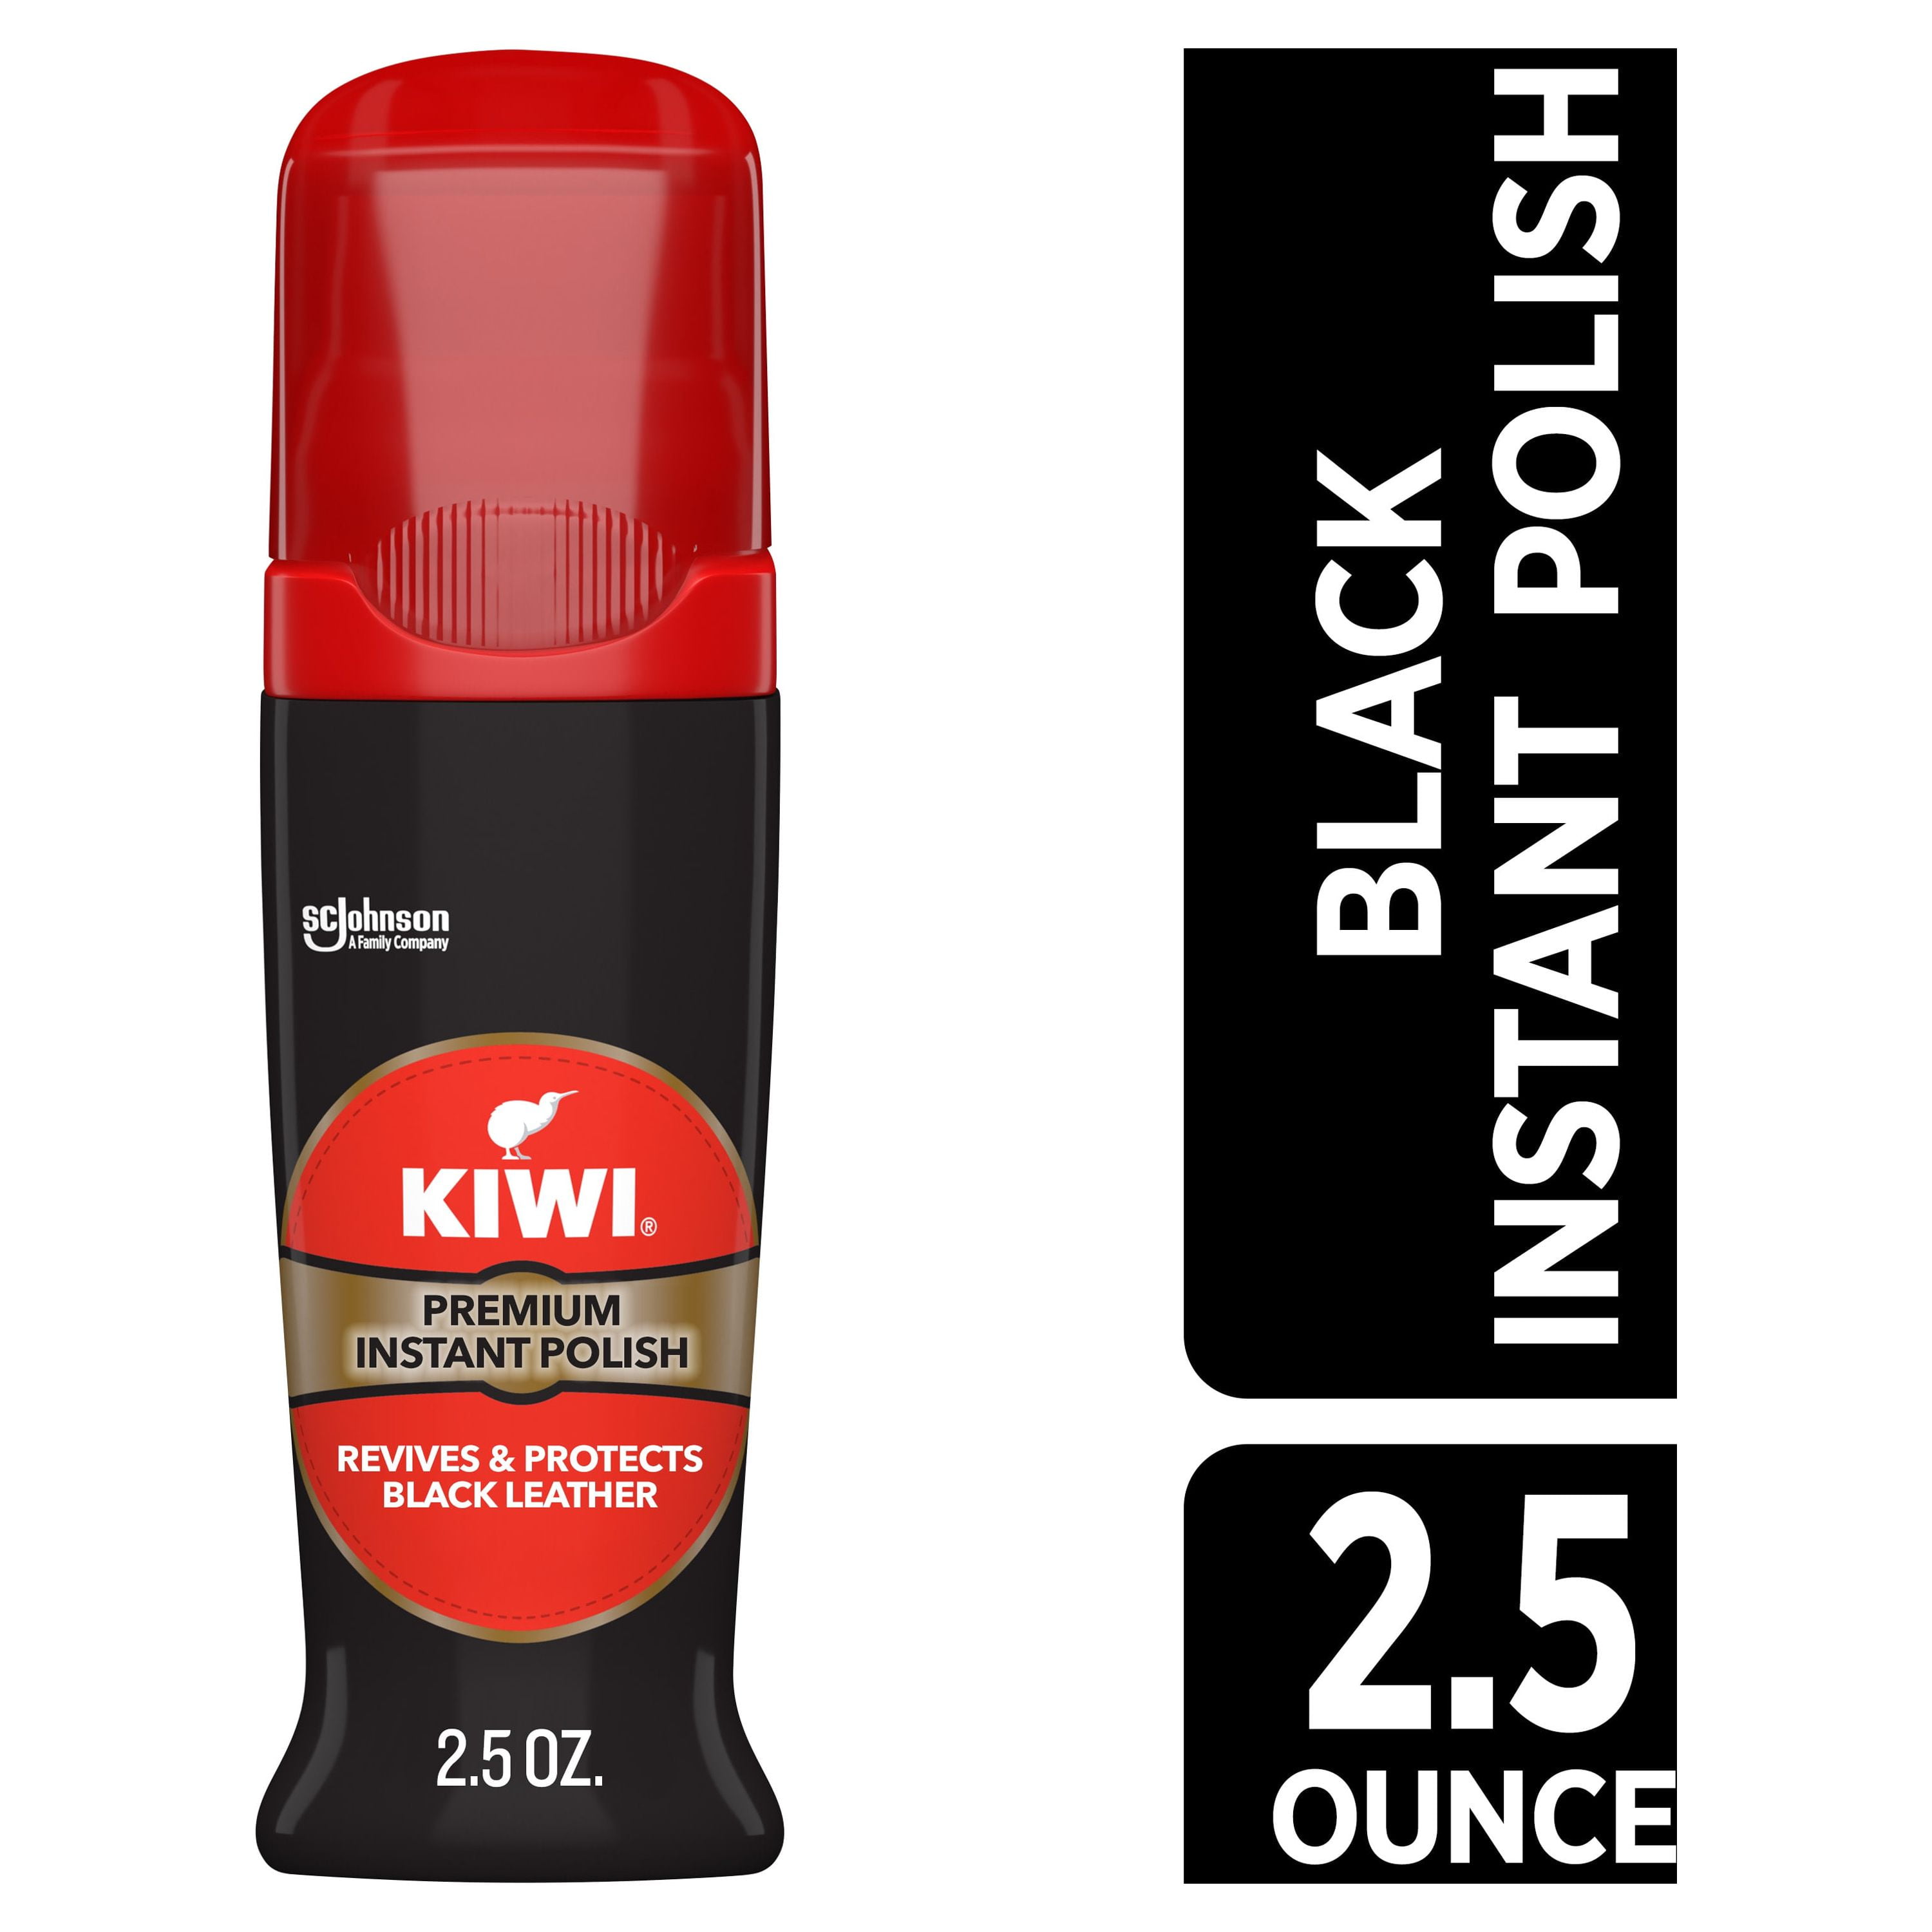 Kiwi Instant Polish, Premium, Black - 2.5 us fl oz (75 ml)